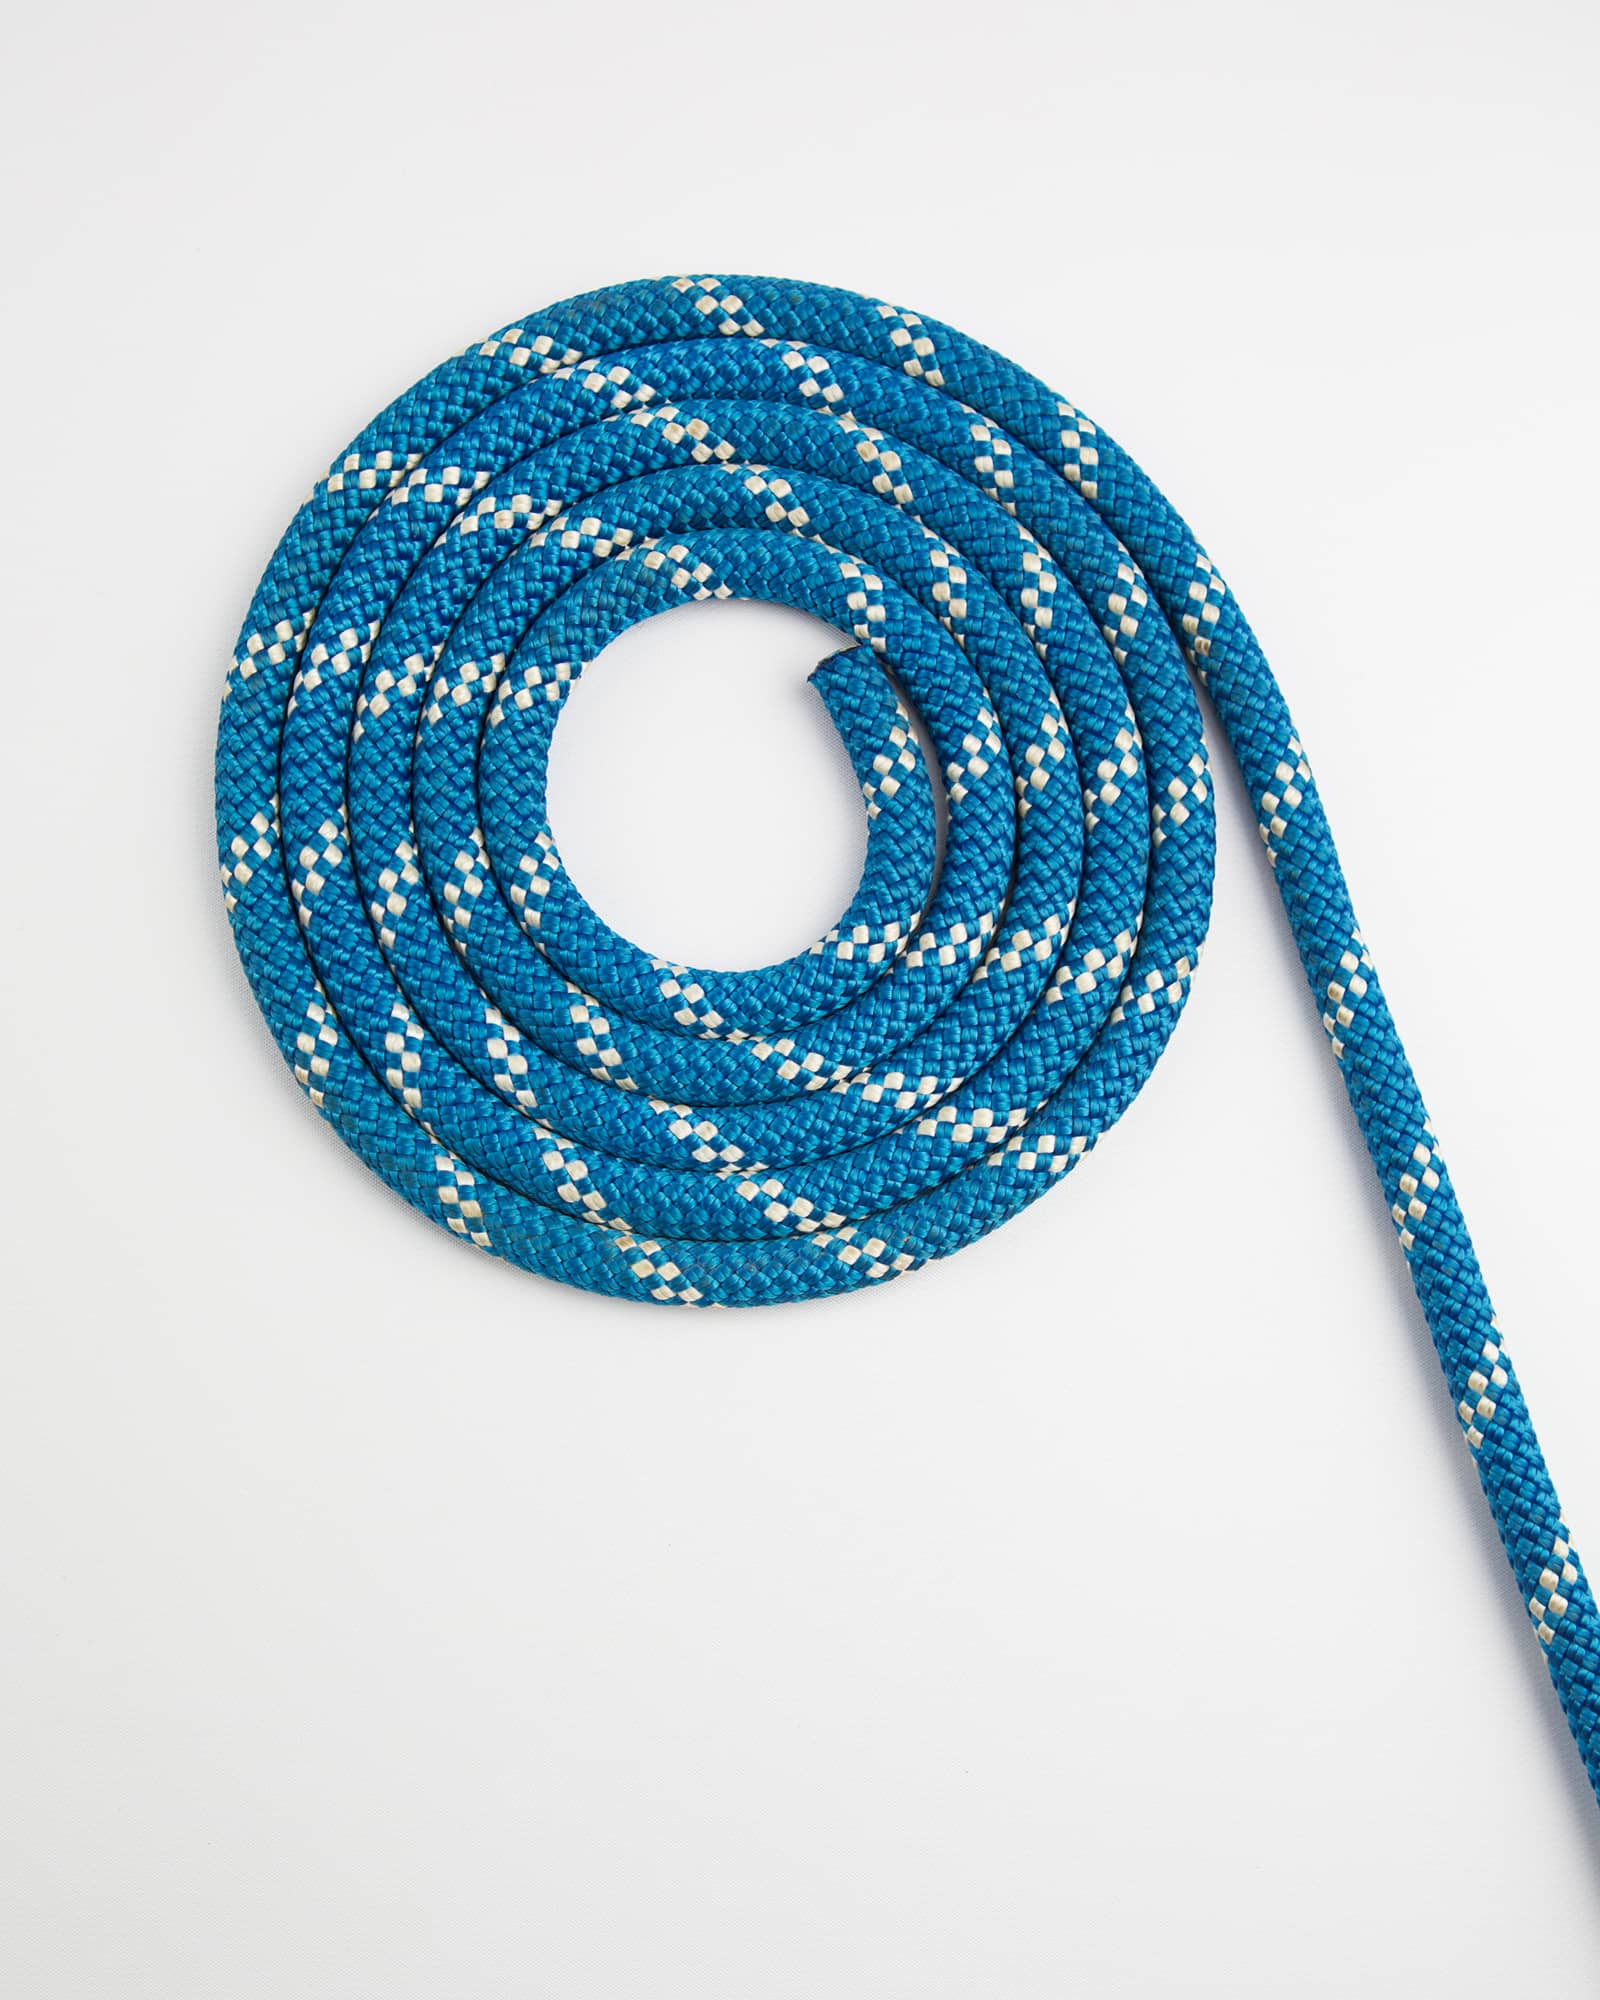 Blue rope photo